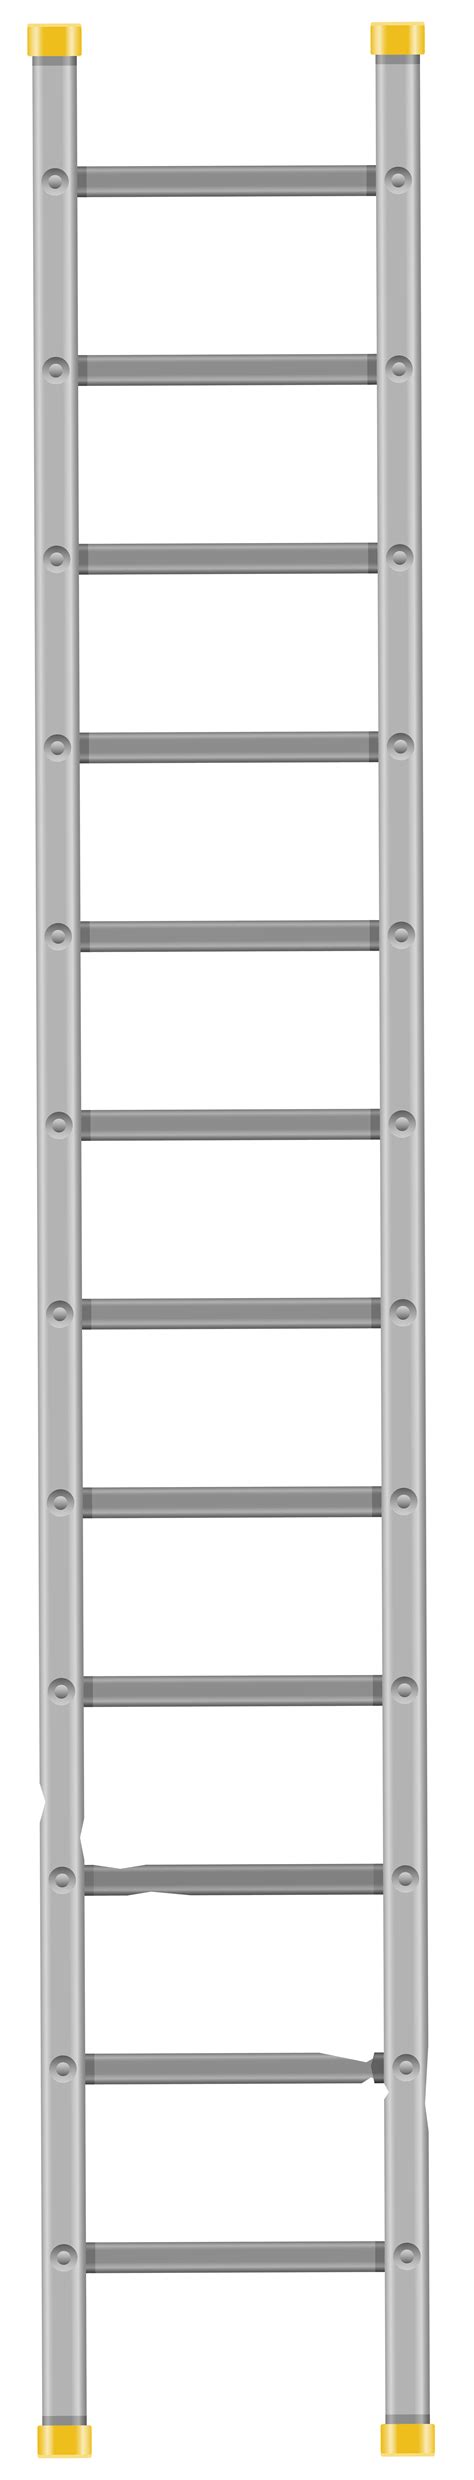 Download Step Vector Ladder Free Clipart Hd Hq Png Image Freepngimg